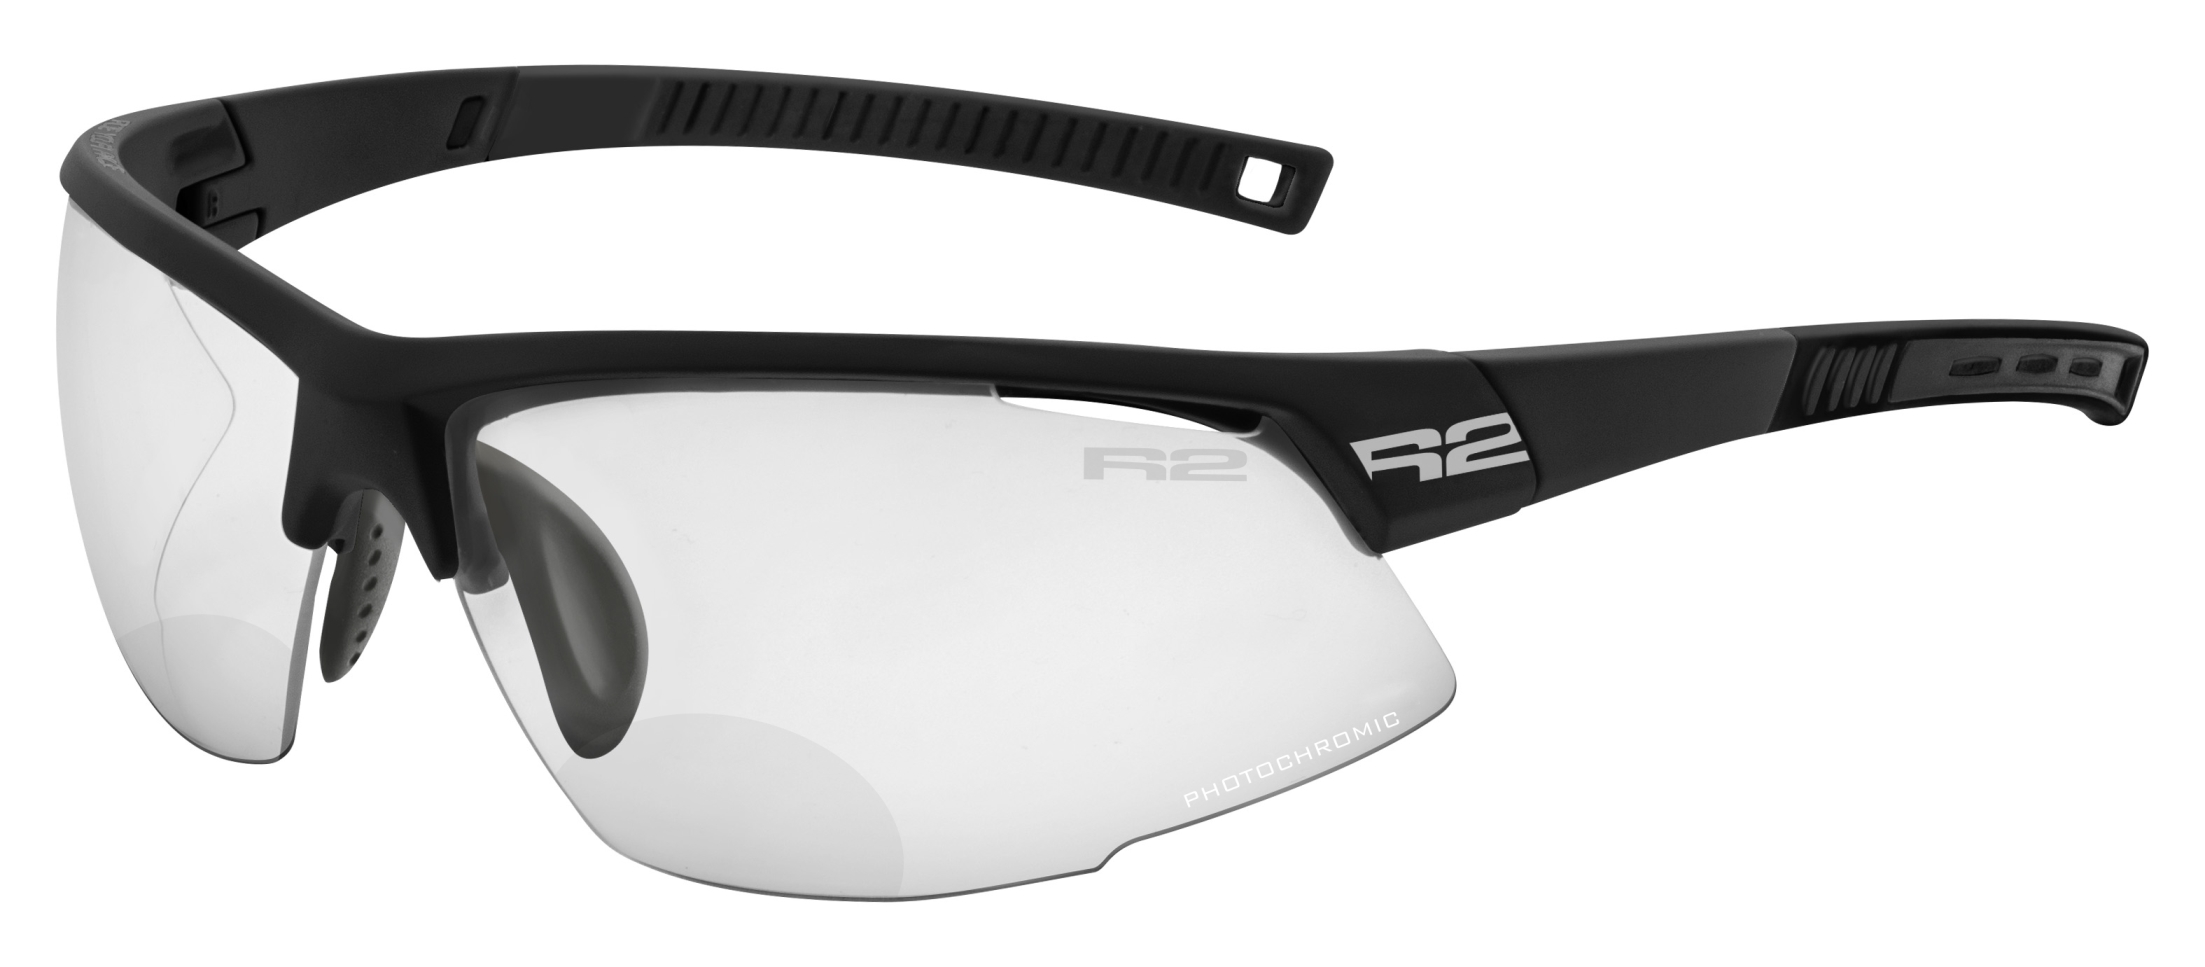 Photochromatic prescription sunglasses R2 RACER AT063A10/1,5  standard